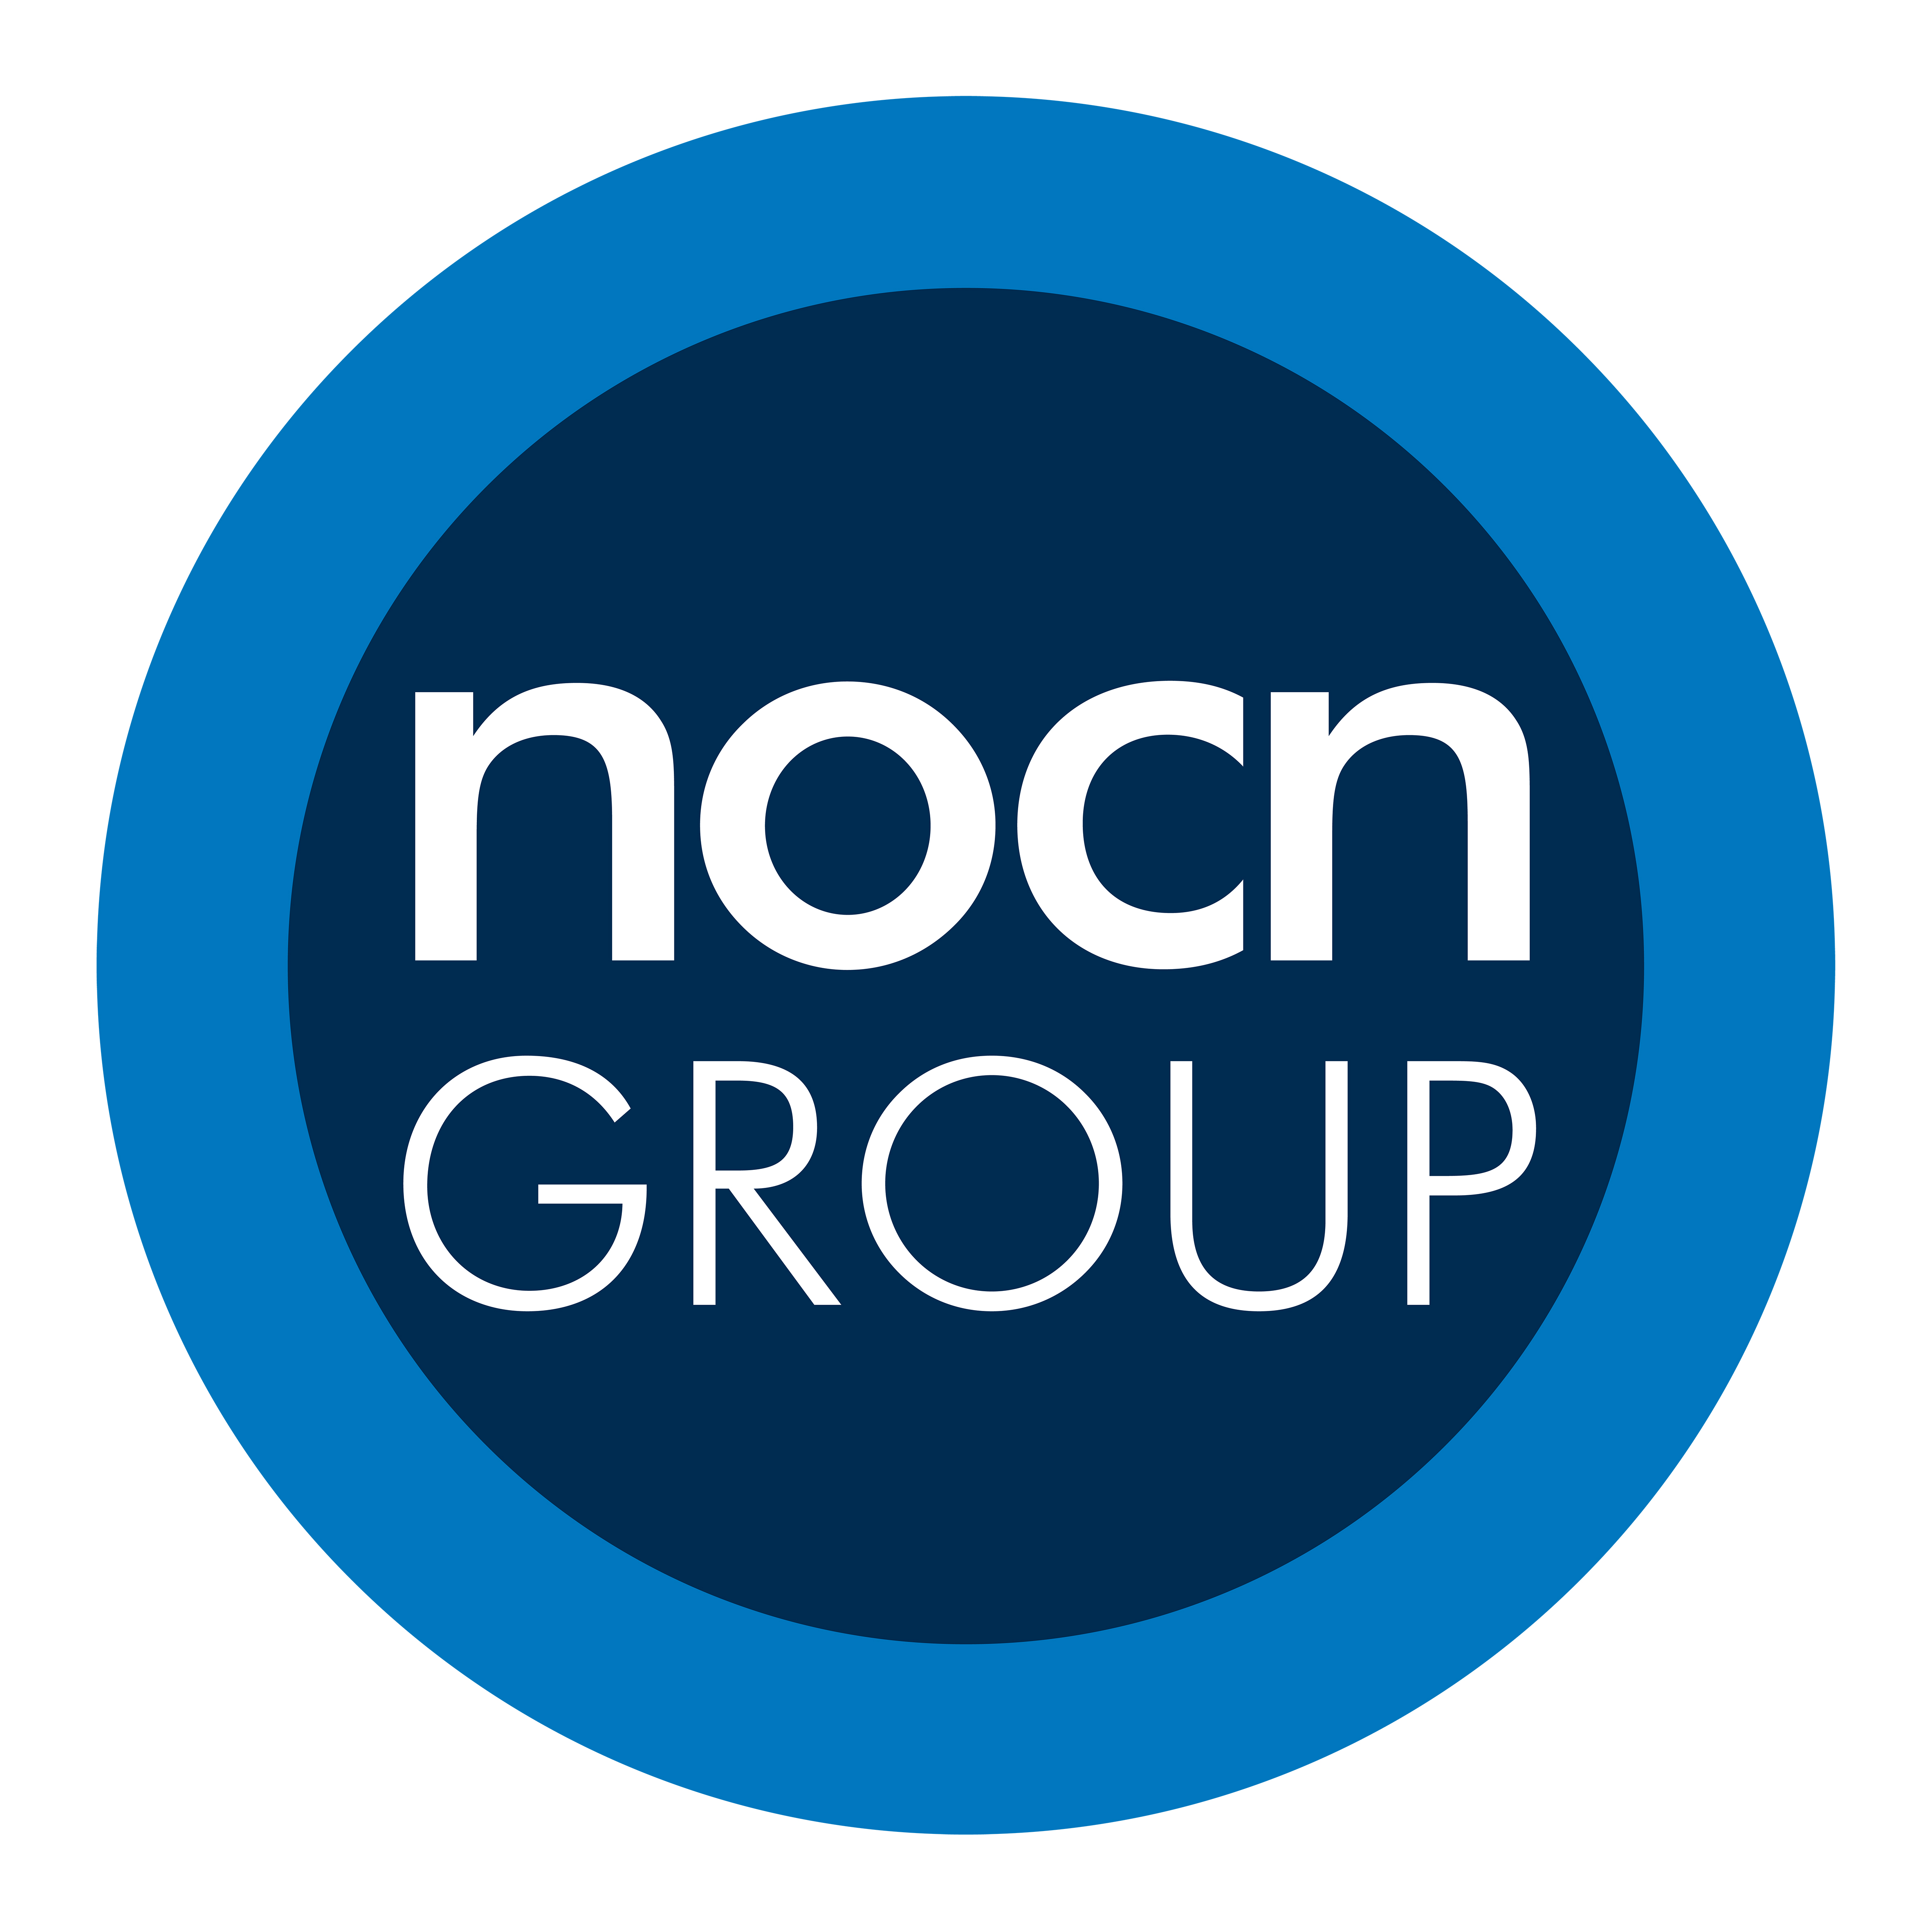 NOCN group logo